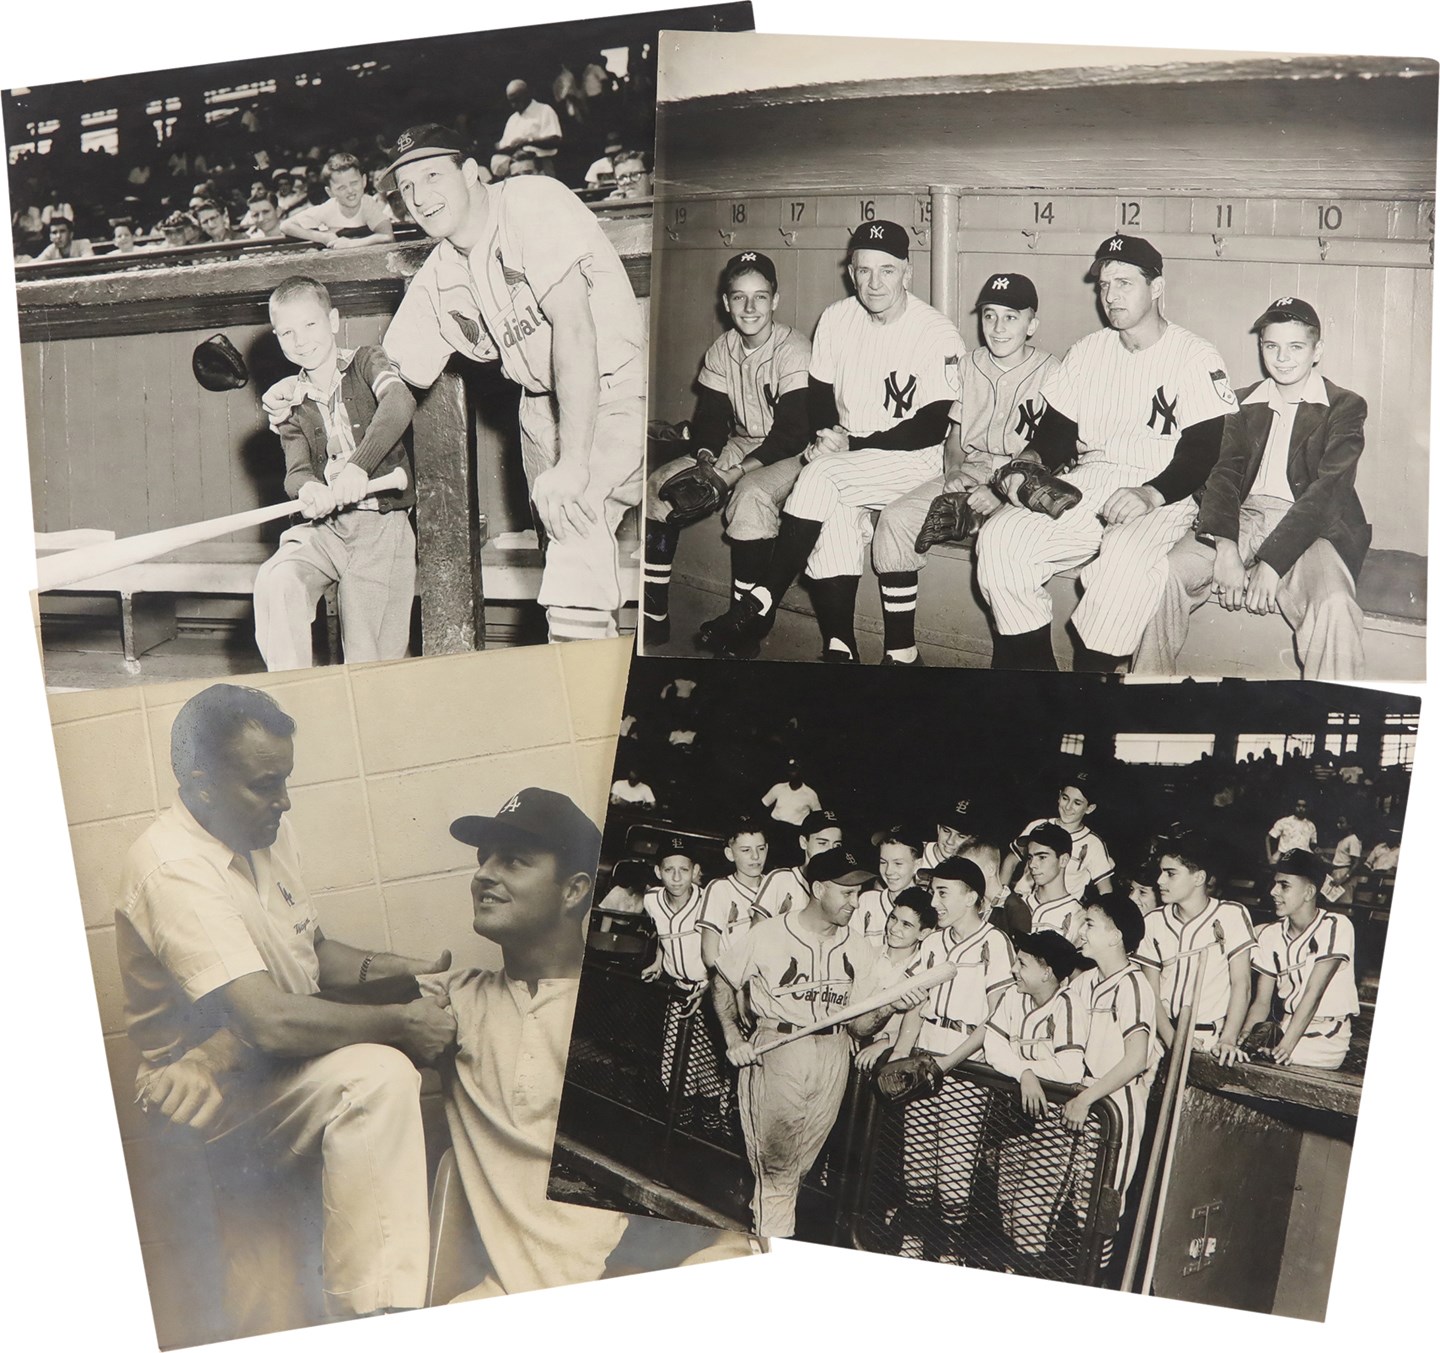 Vintage Sports Photographs - 1950s-60s Oversize PSA Type I Original Baseball Photographs (4)